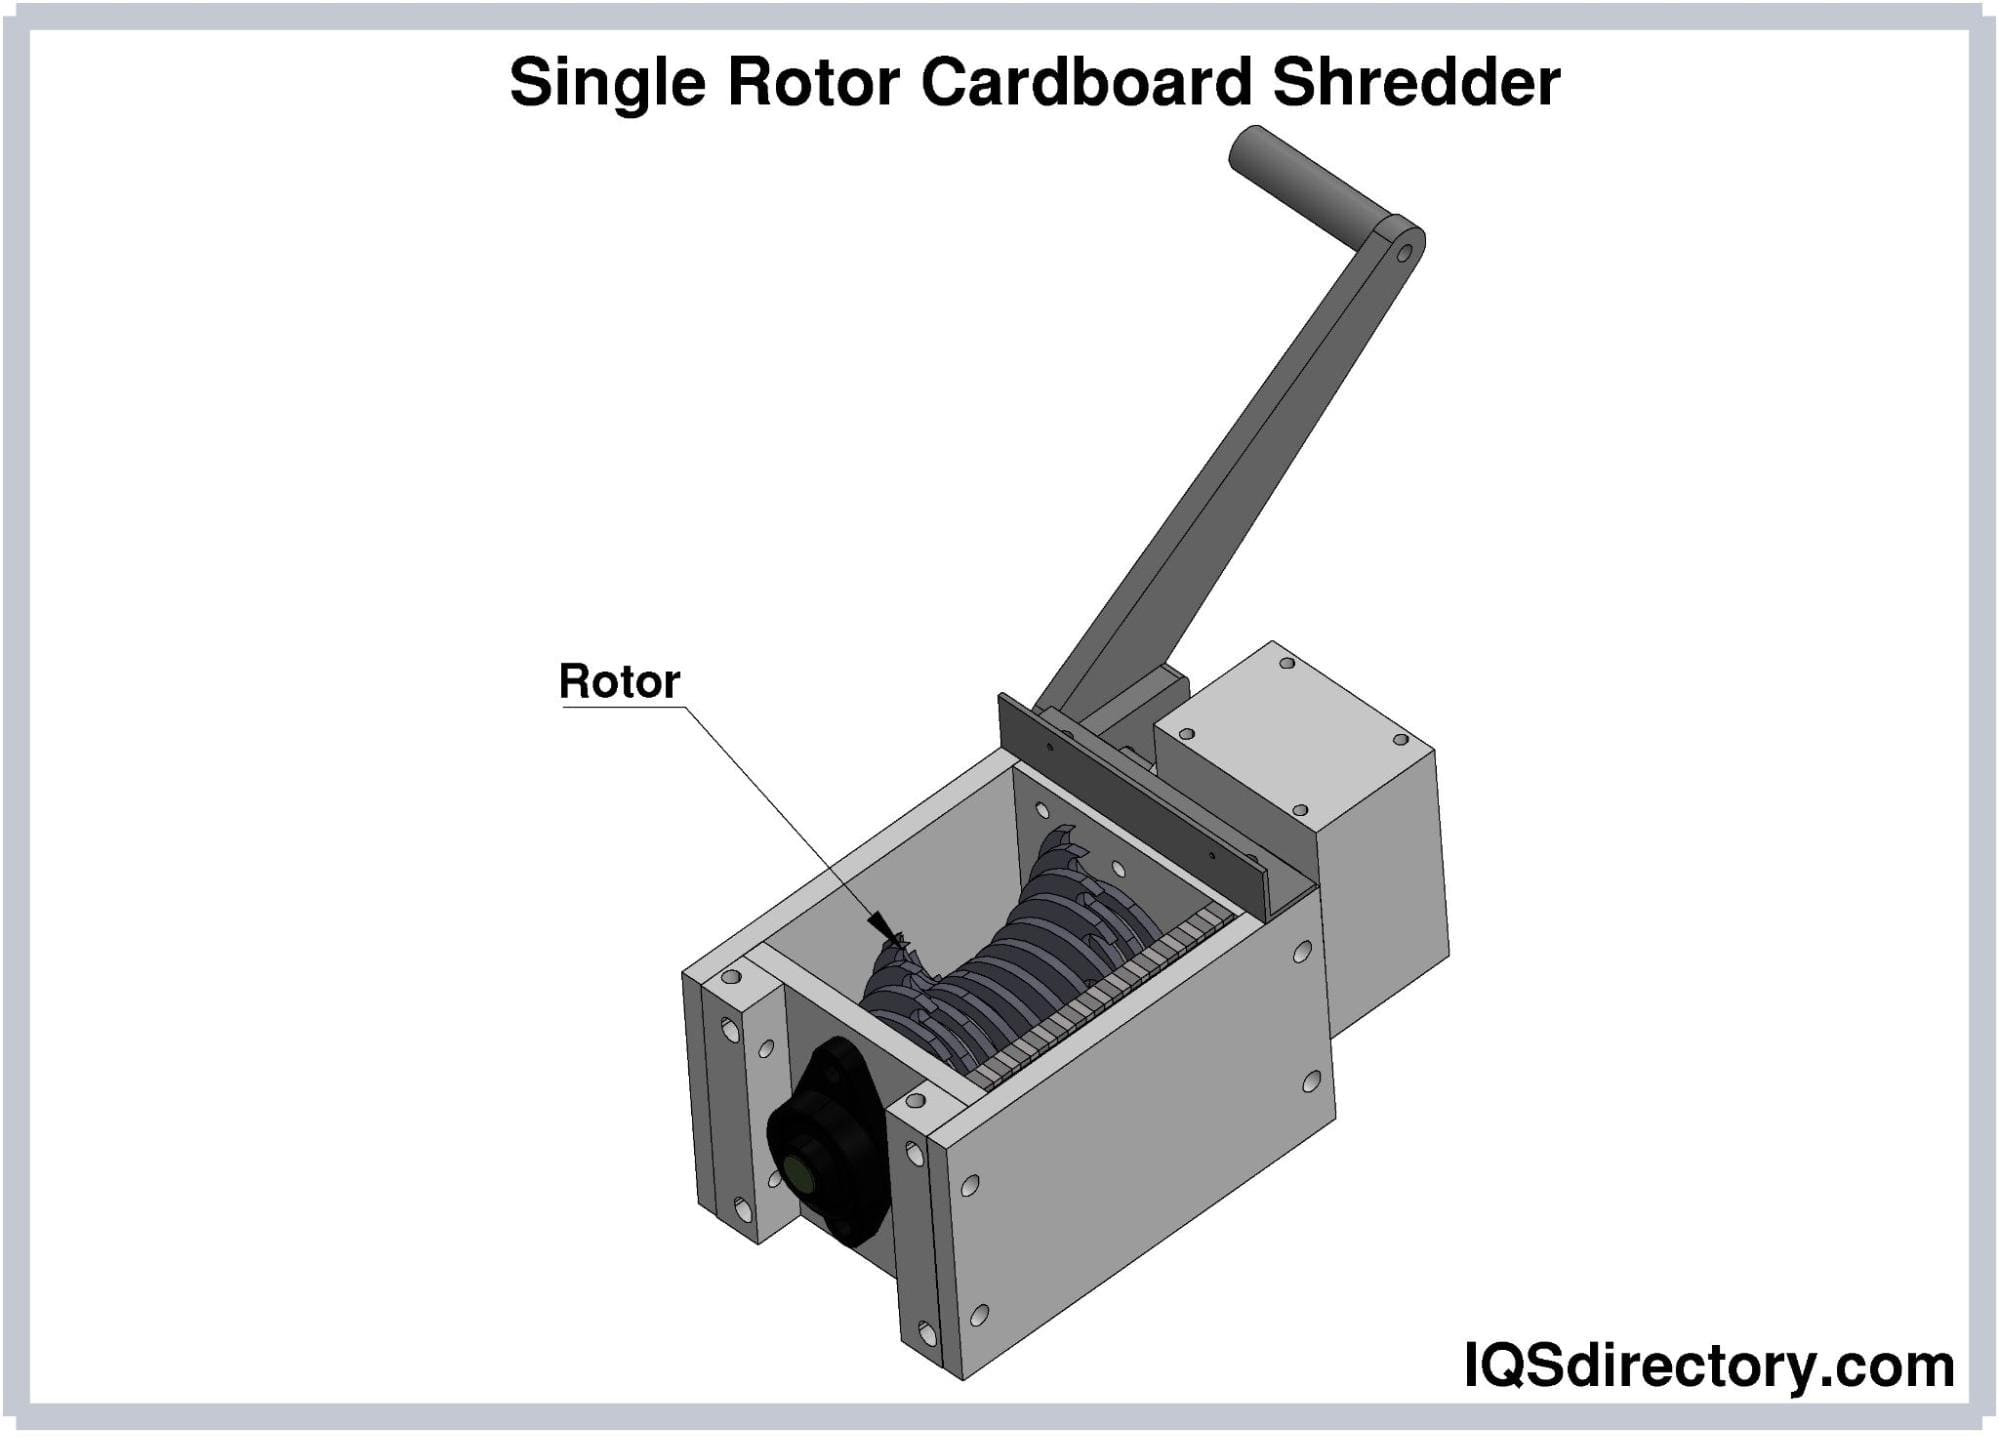 Single Rotor Cardboard Shredder